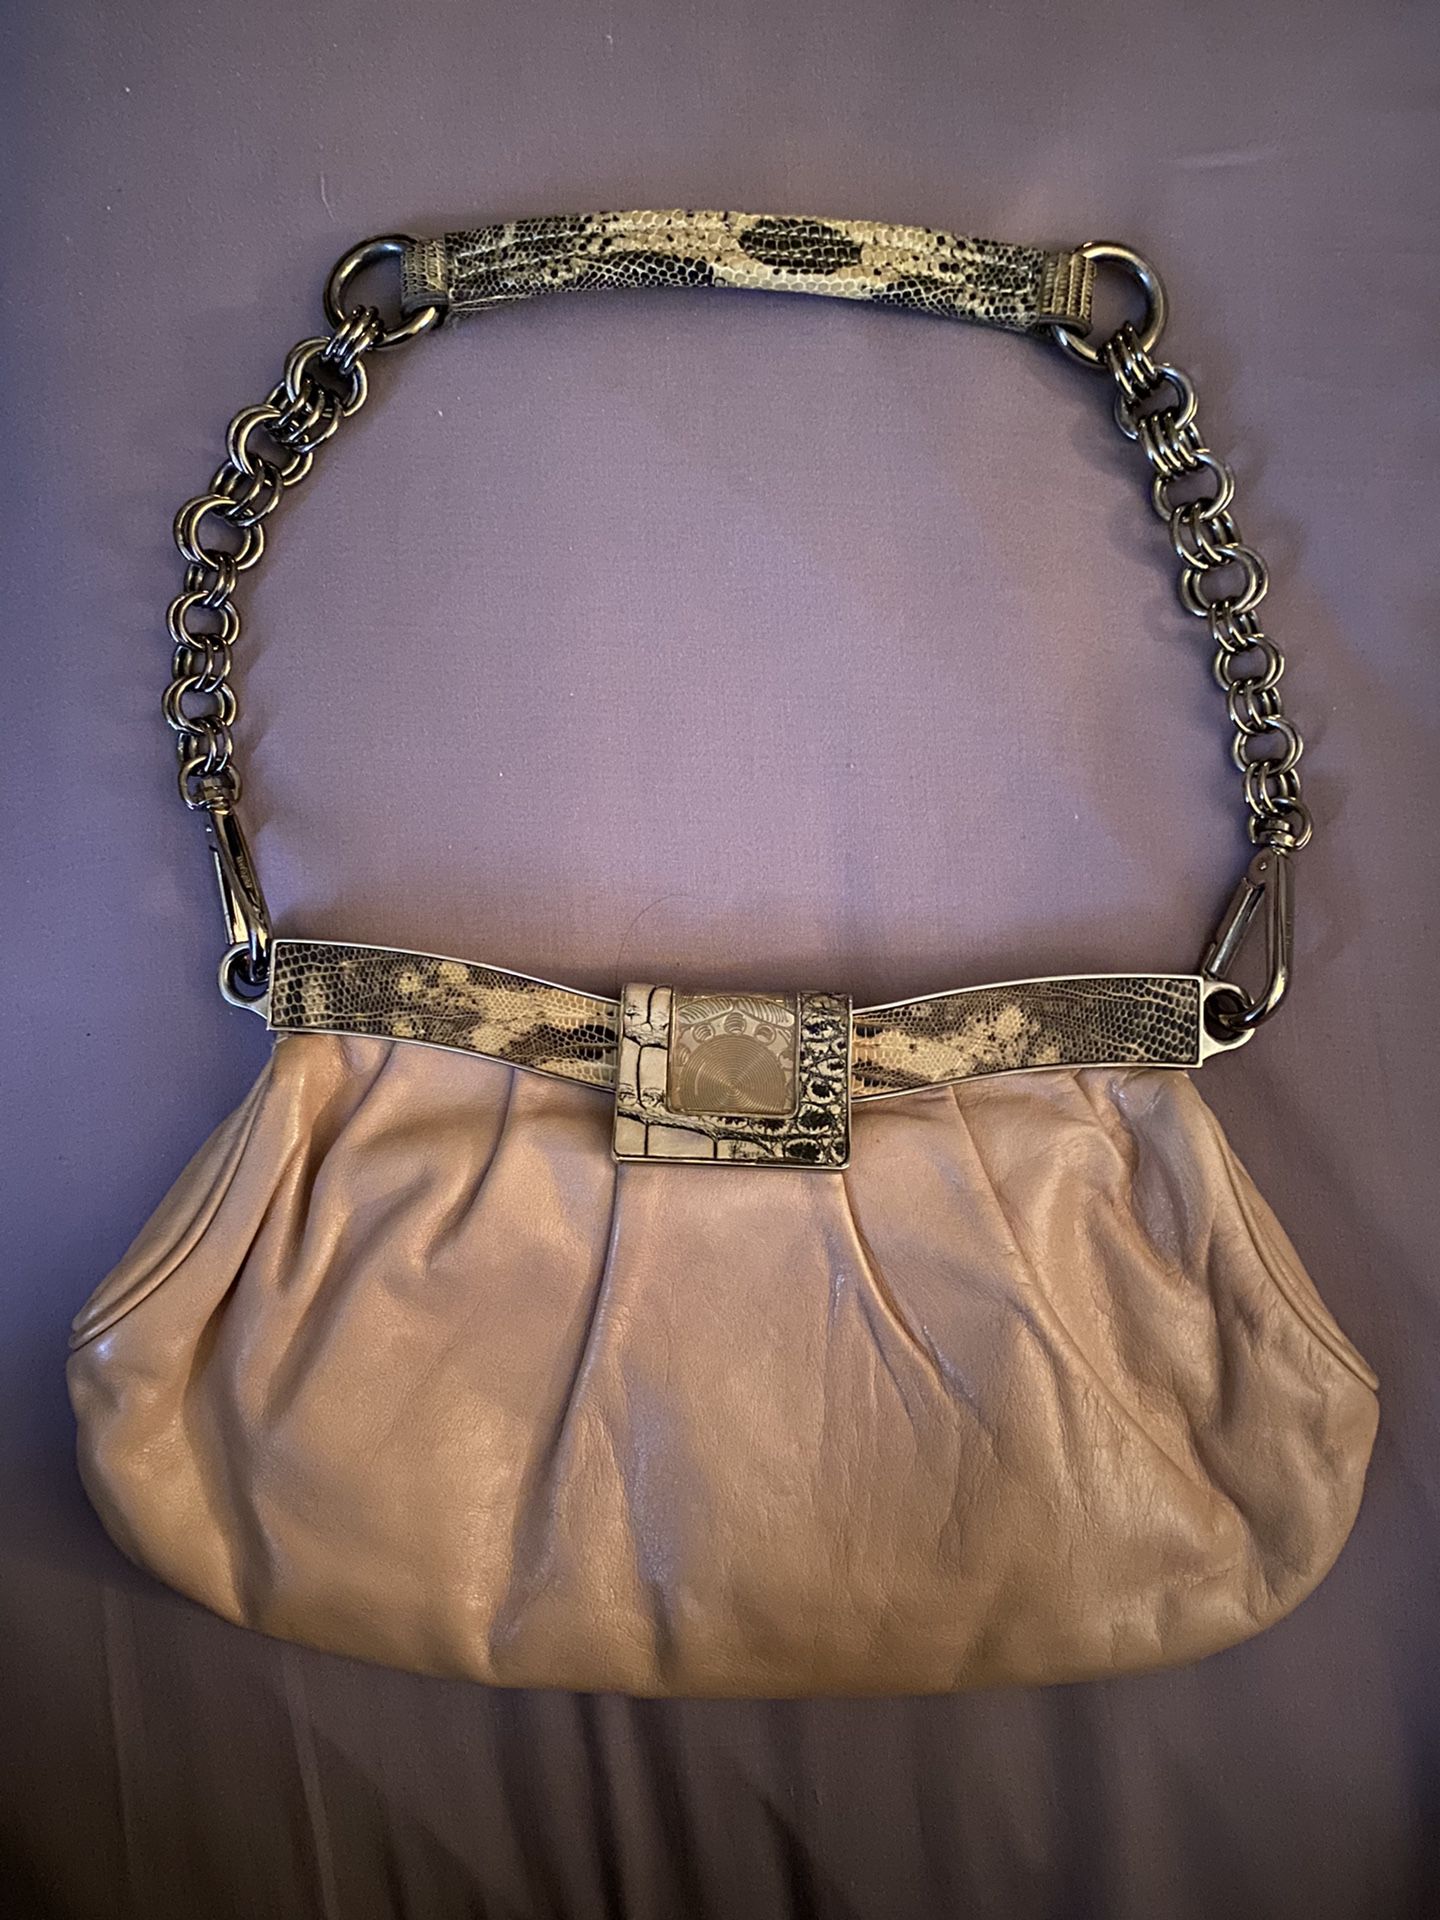 Vintage Prada Handbag With Snakeskin And Chain Strap